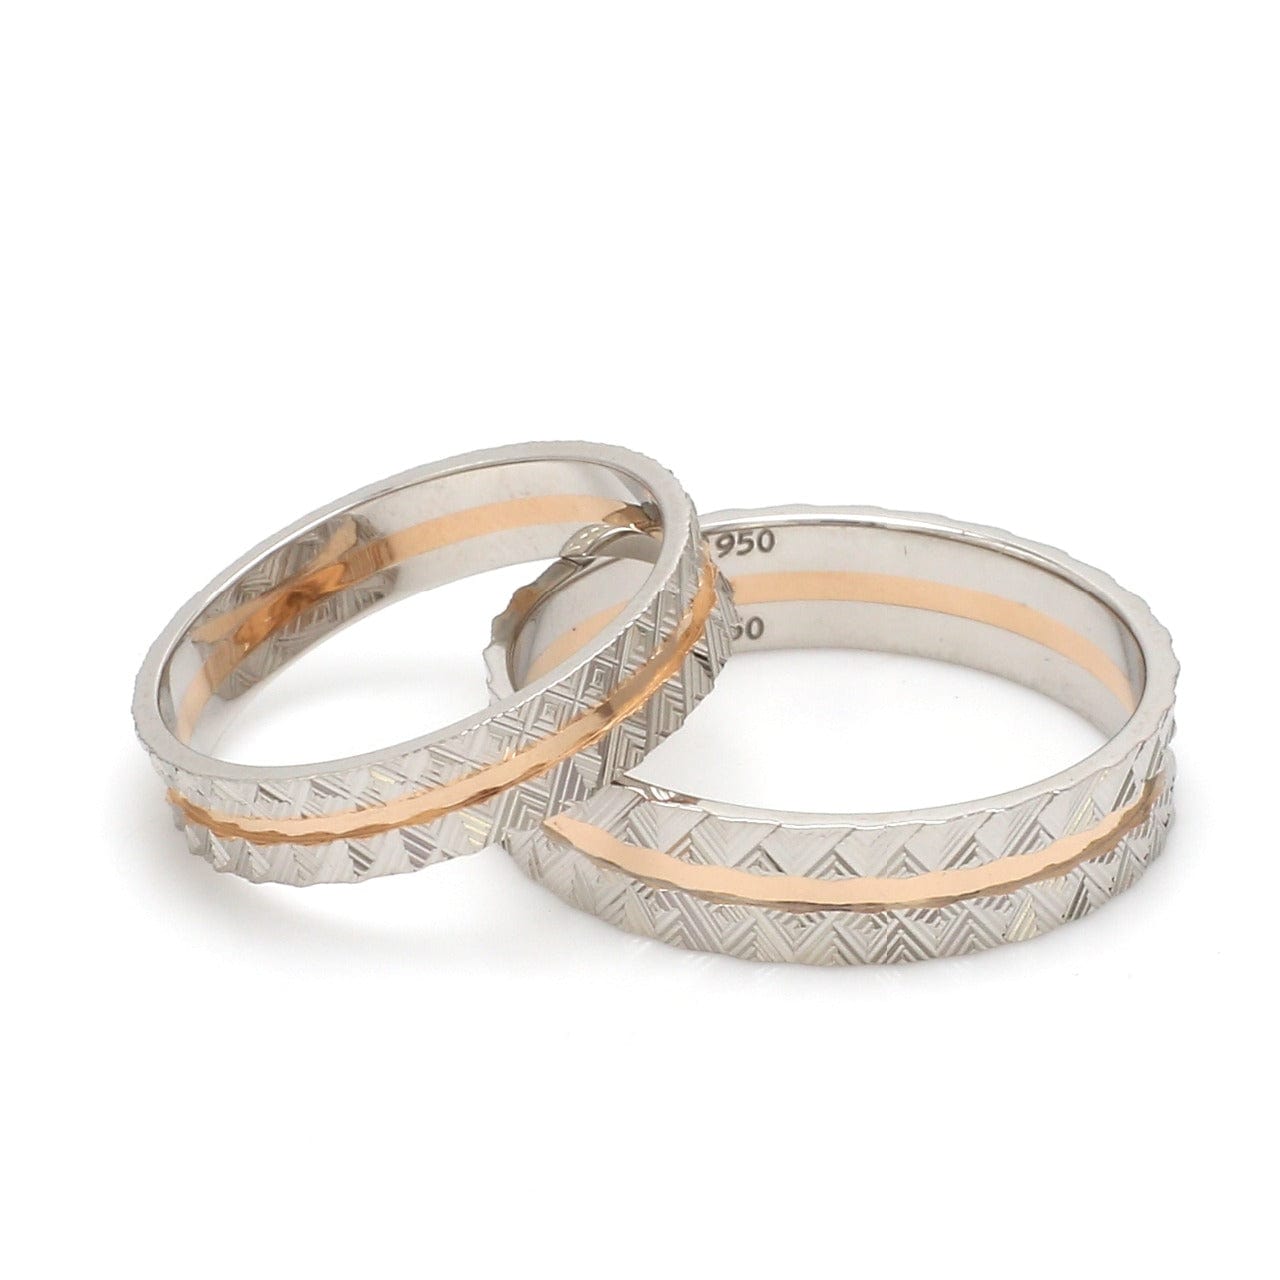 Platinum Couple Ring at 15000.00 INR in Mumbai, Maharashtra | Ss Platinum